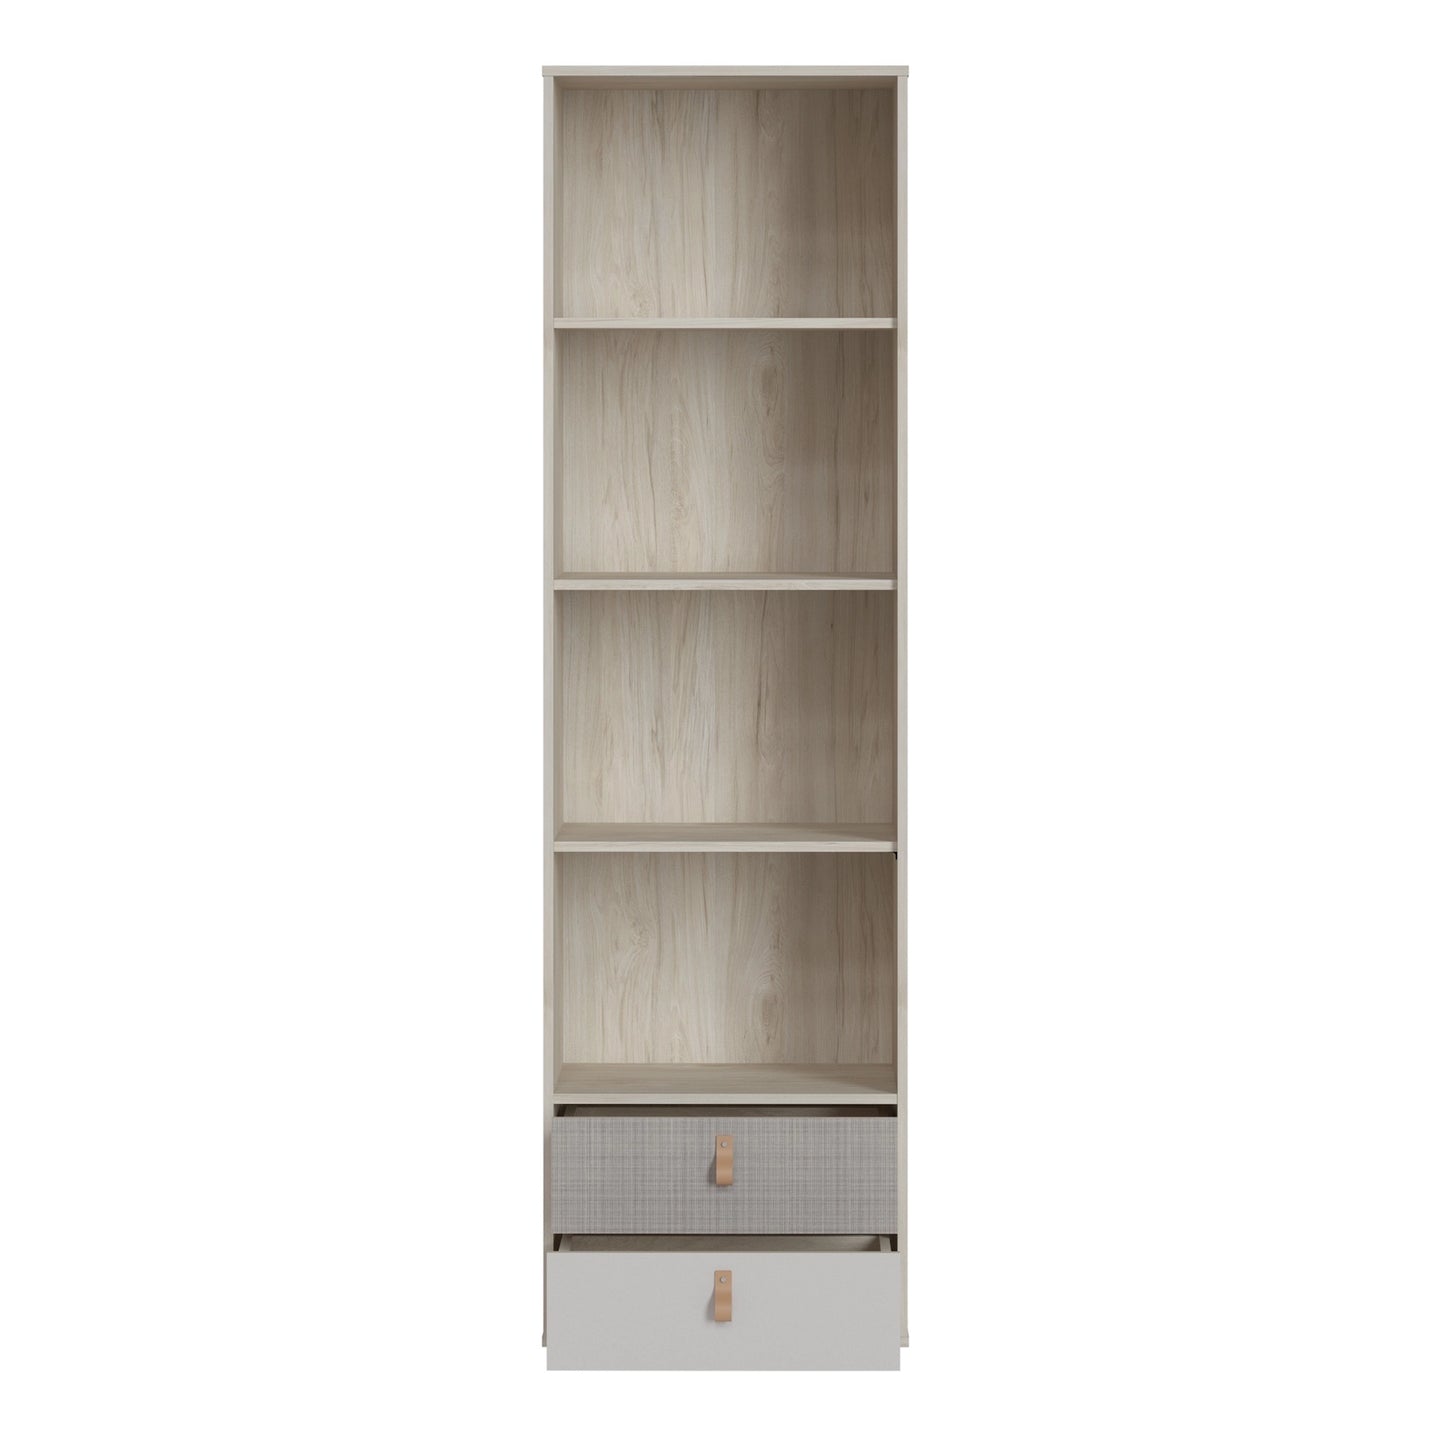 Furniture To Go Denim 2 Drawer Bookcase in Light Walnut, Grey Fabric Effect & Cashmere